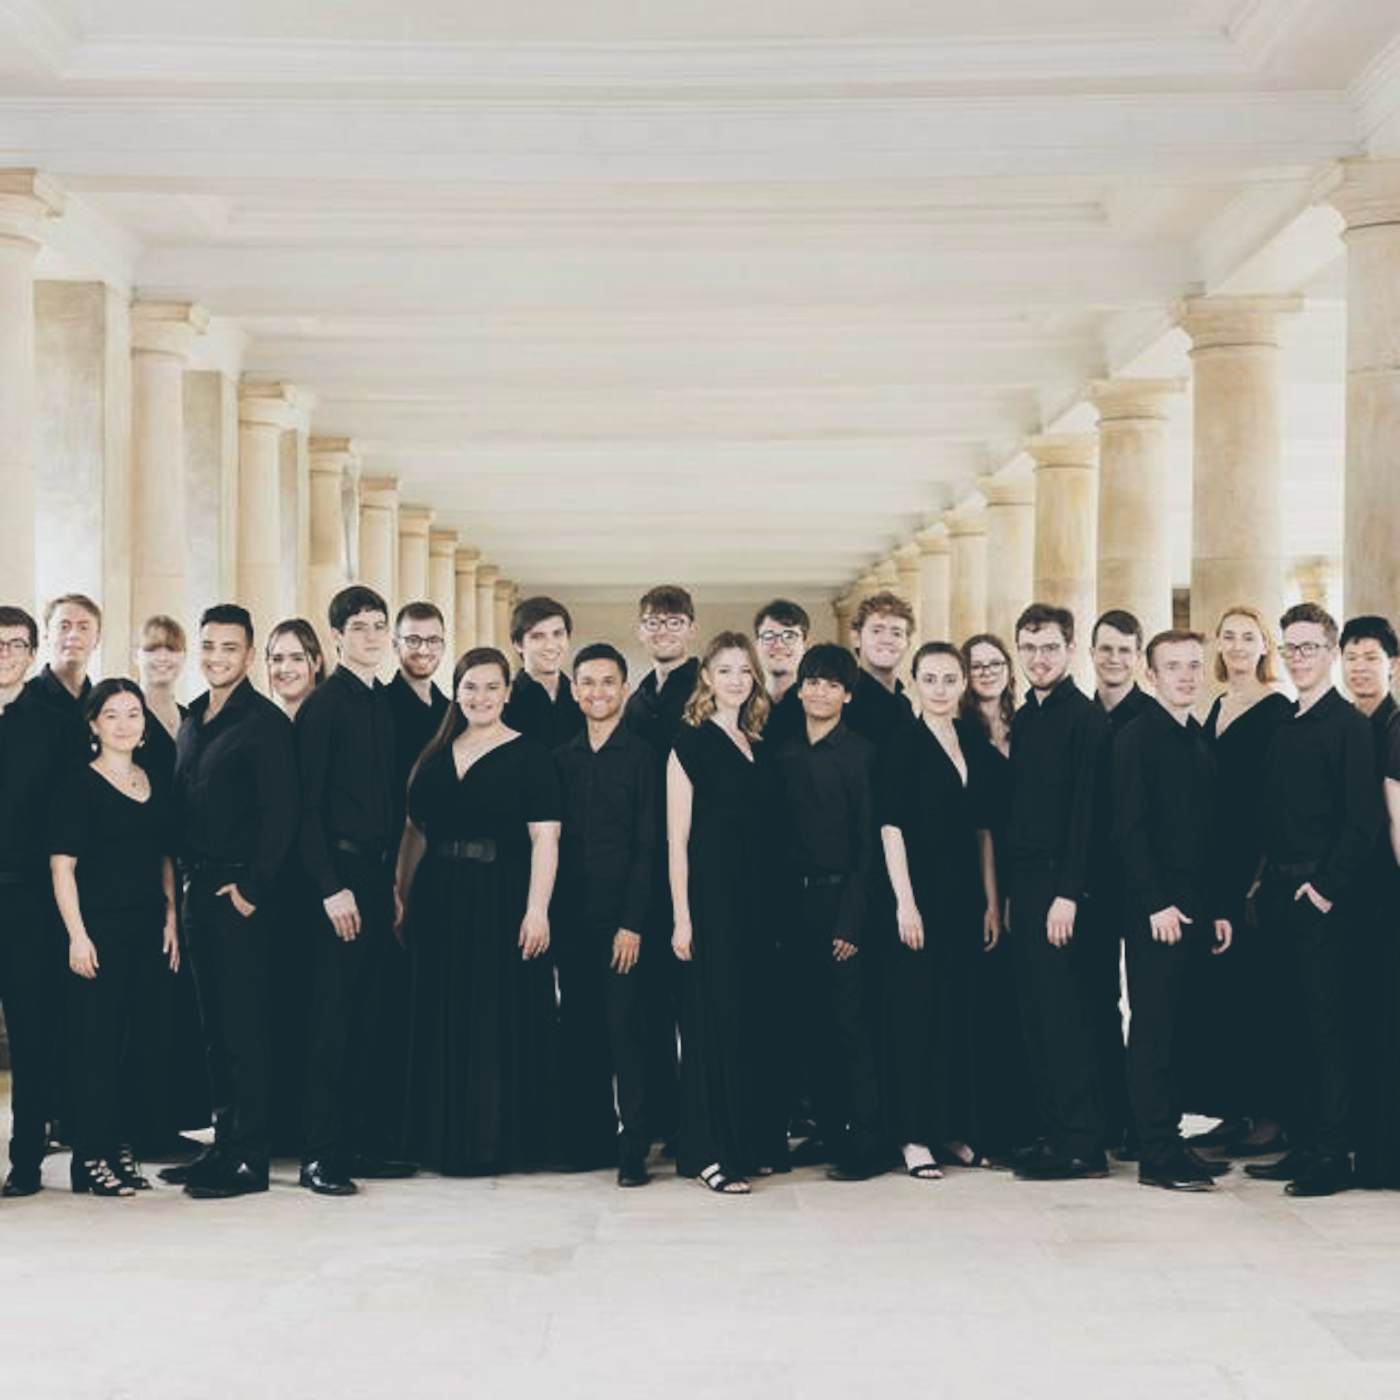 The Choir Of Trinity College, Cambridge